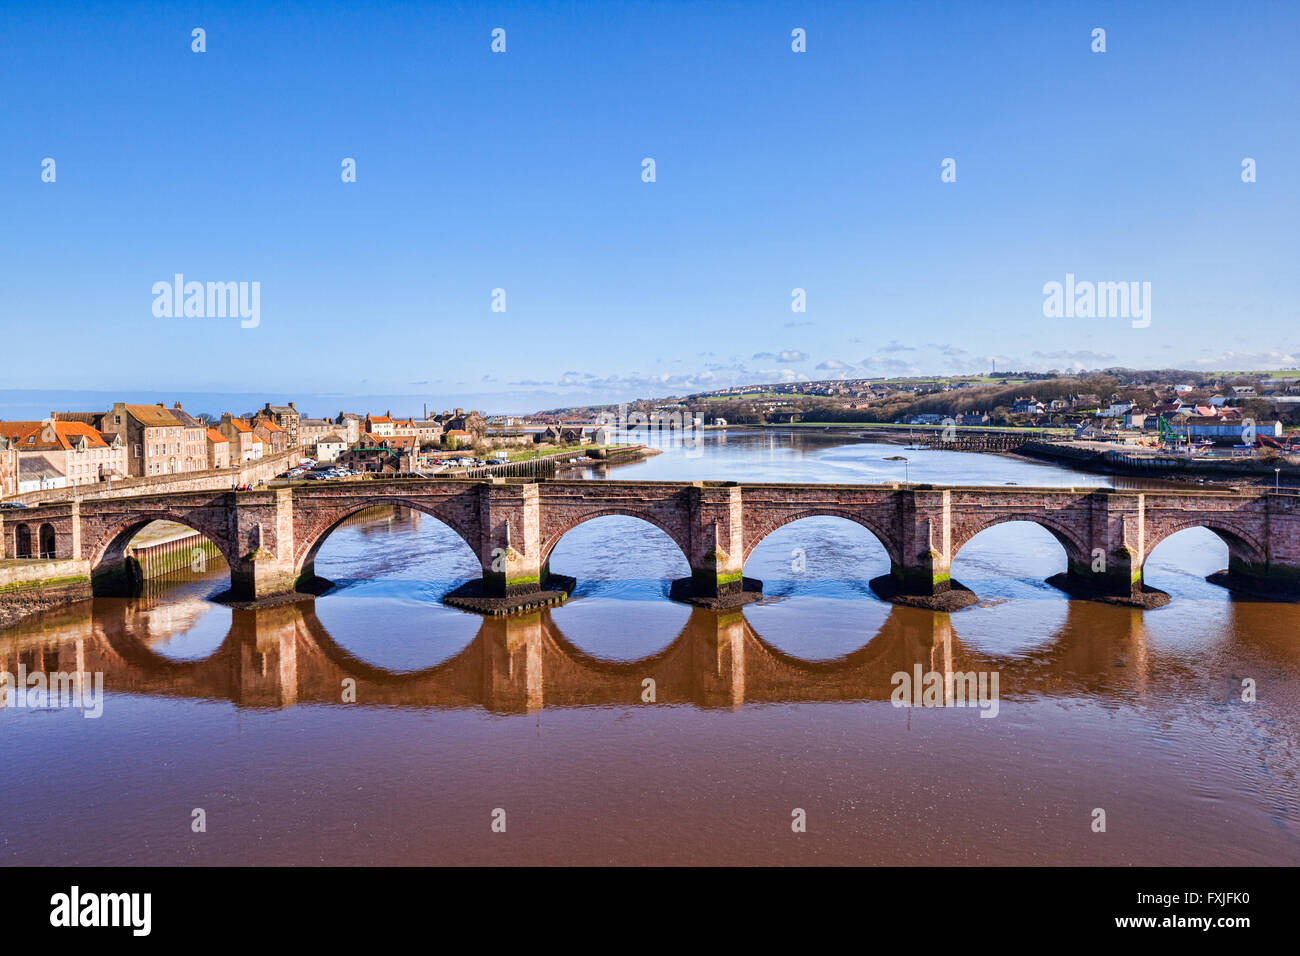 The River Tweed and Berwick Old Bridge, Berwick-upon-Tweed, Northumberland, England, UK Stock Photo